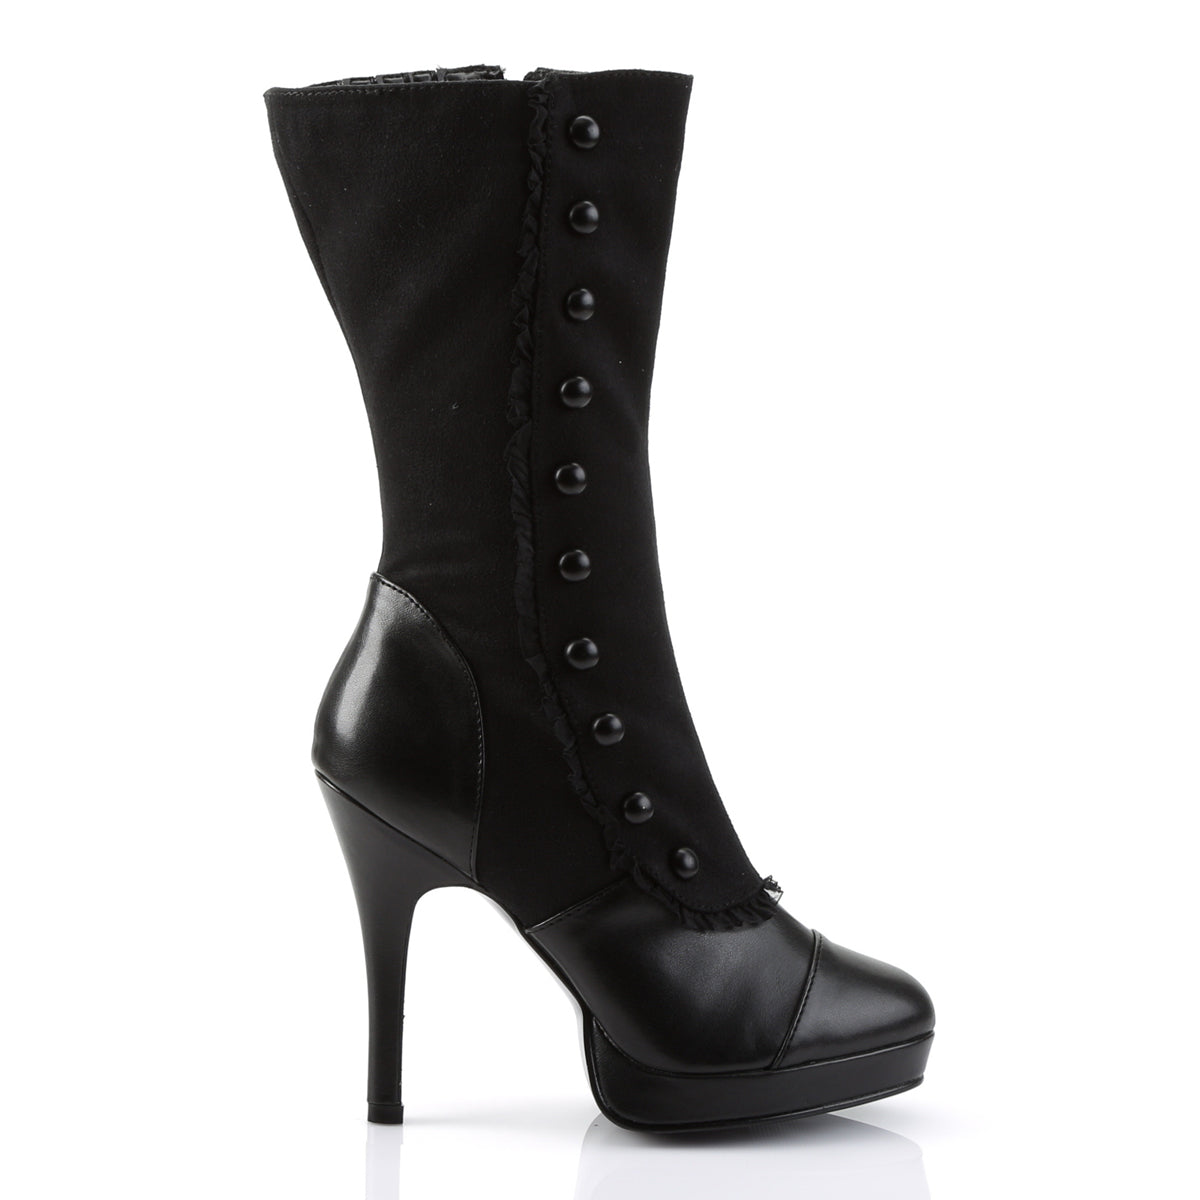 SPLENDOR-130 Retro 4.5" Heel Black Microfiber Women Boots Funtasma Costume Shoes Fancy Dress